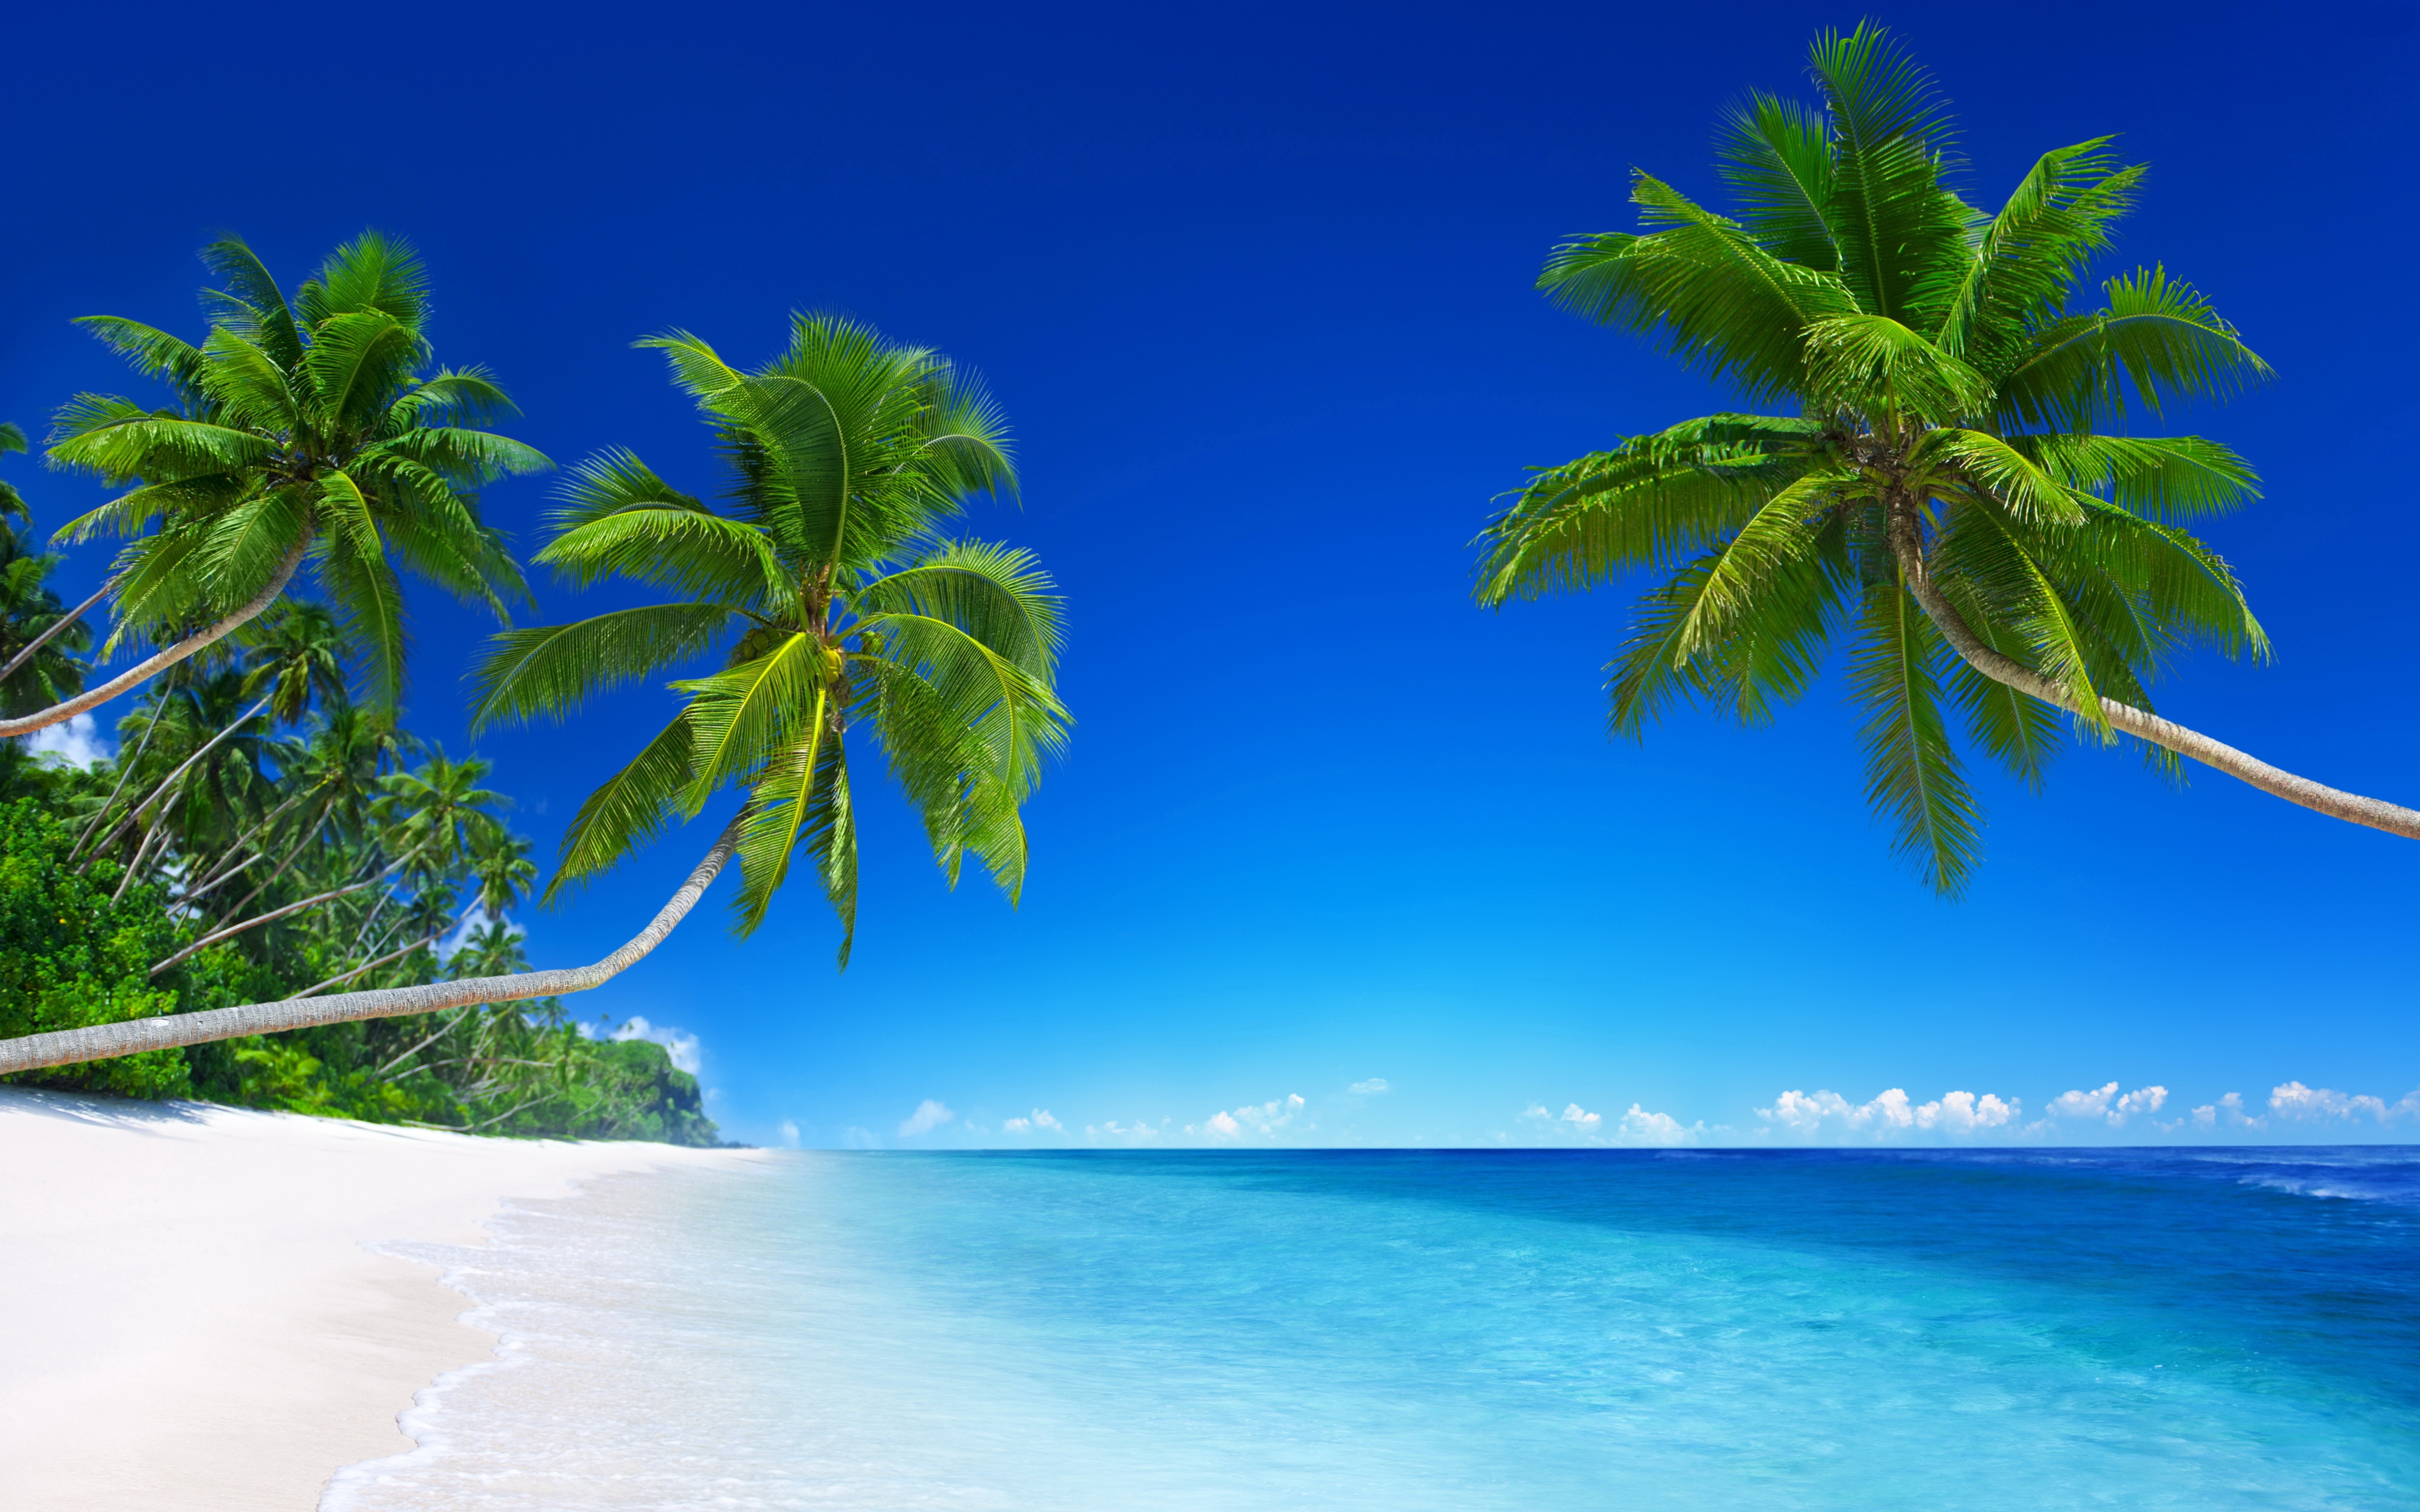 Wallpapers palm trees island clean ocean on the desktop